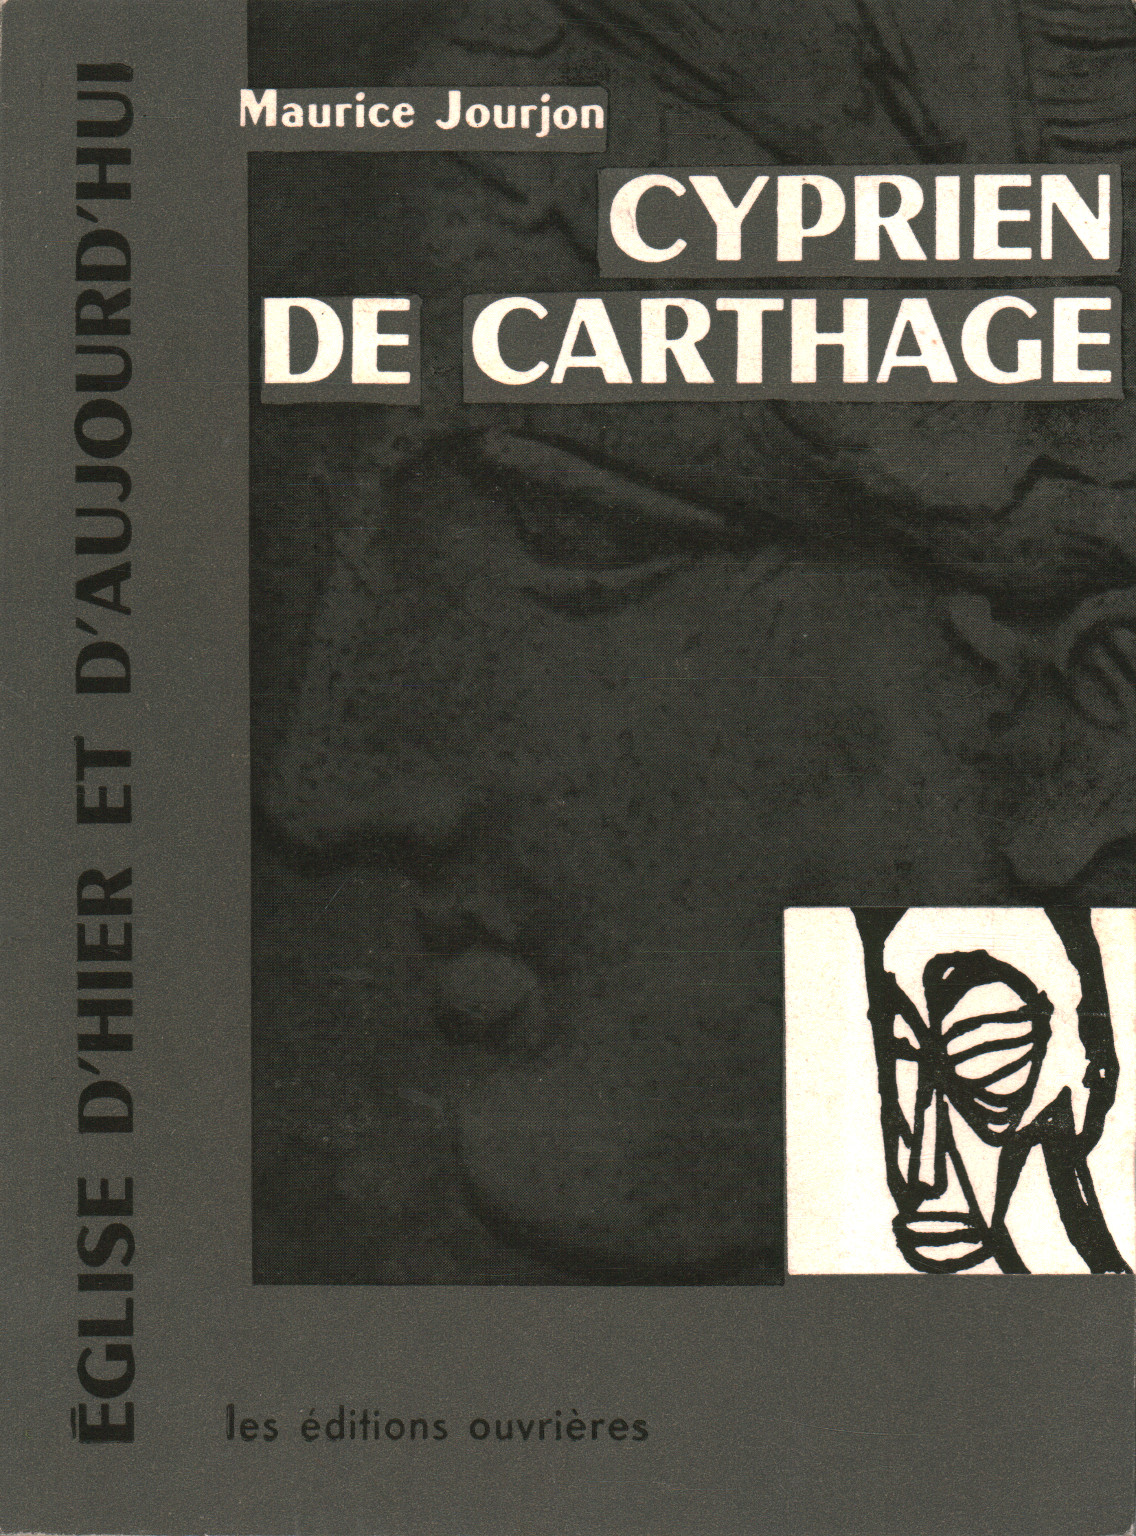 Cyprien de Carthage, Maurice Jourjon